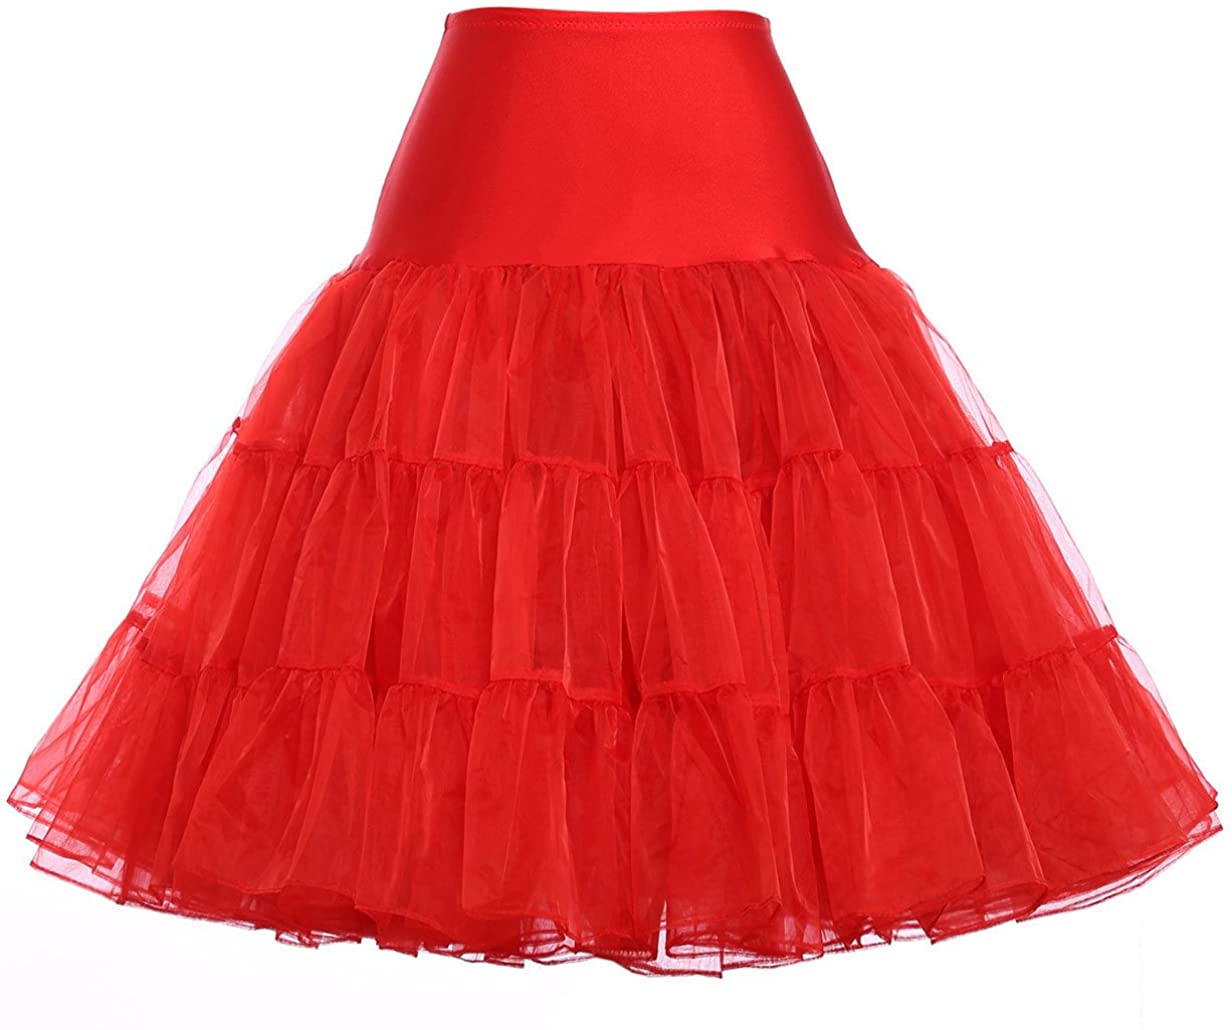 GRACE KARIN Femme Jupon Tulle Long Vintage Elagant Petticoat Tutu Pin Up Trois Couches CLE2512 